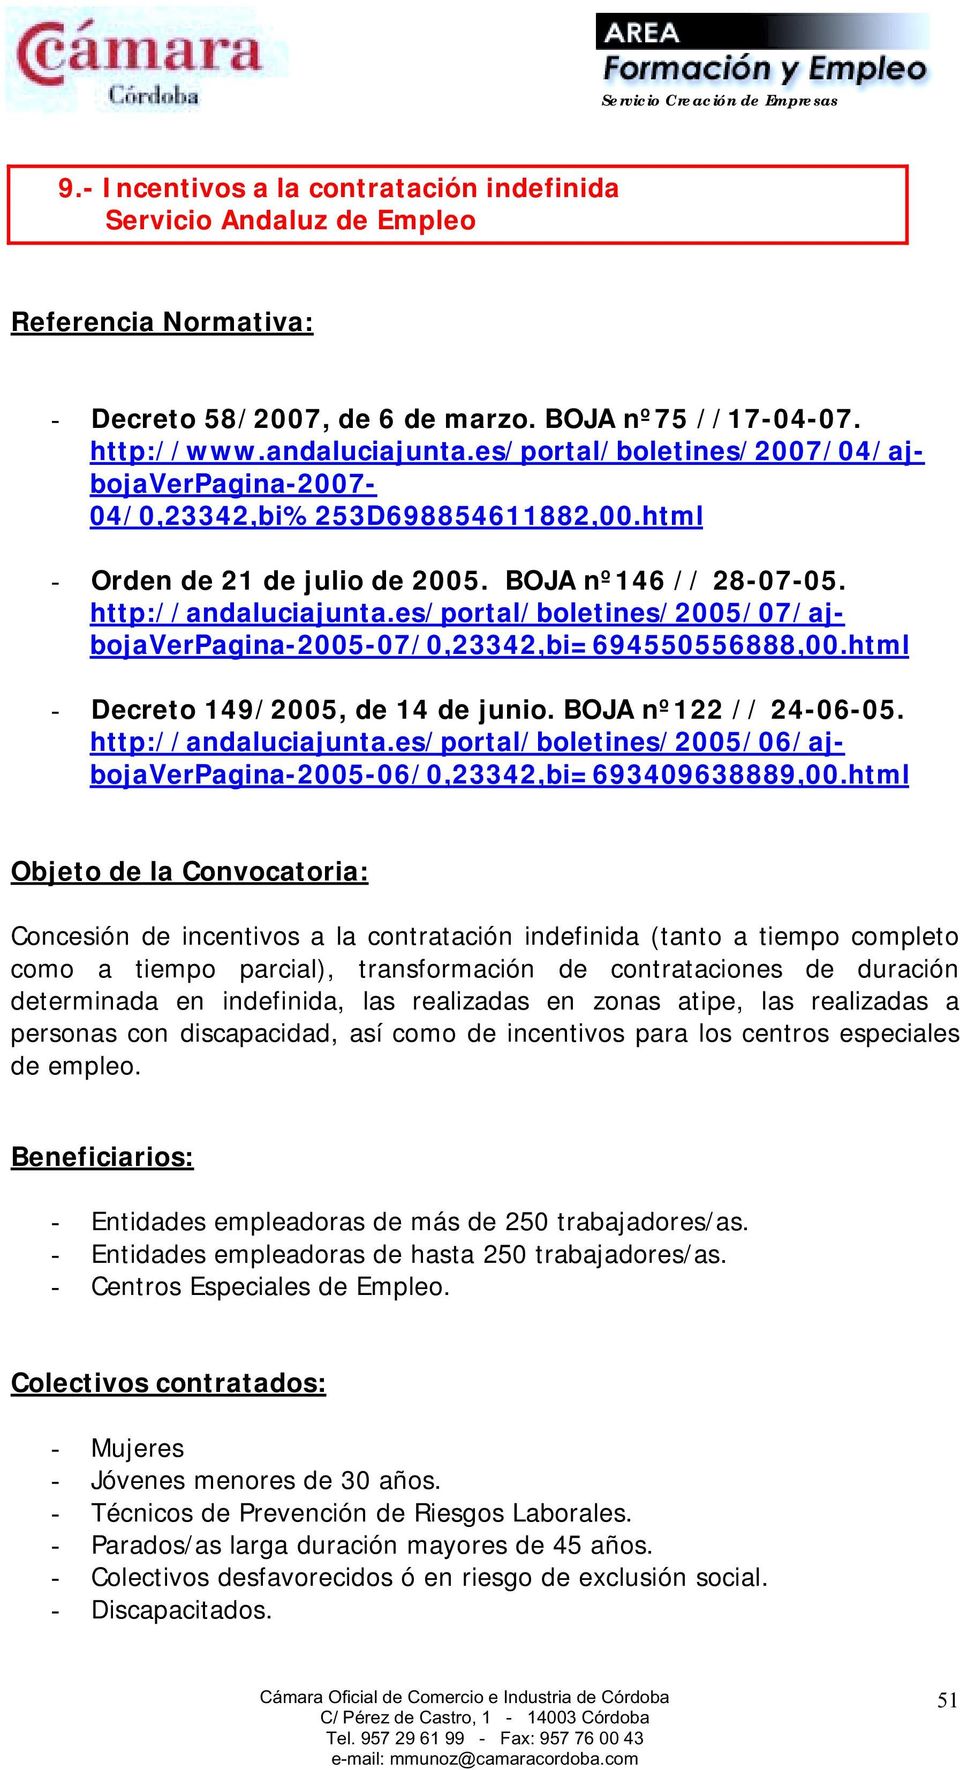 es/portal/boletines/2005/07/ajbojaverpagina-2005-07/0,23342,bi=694550556888,00.html - Decreto 149/2005, de 14 de junio. BOJA nº122 // 24-06-05. http://andaluciajunta.